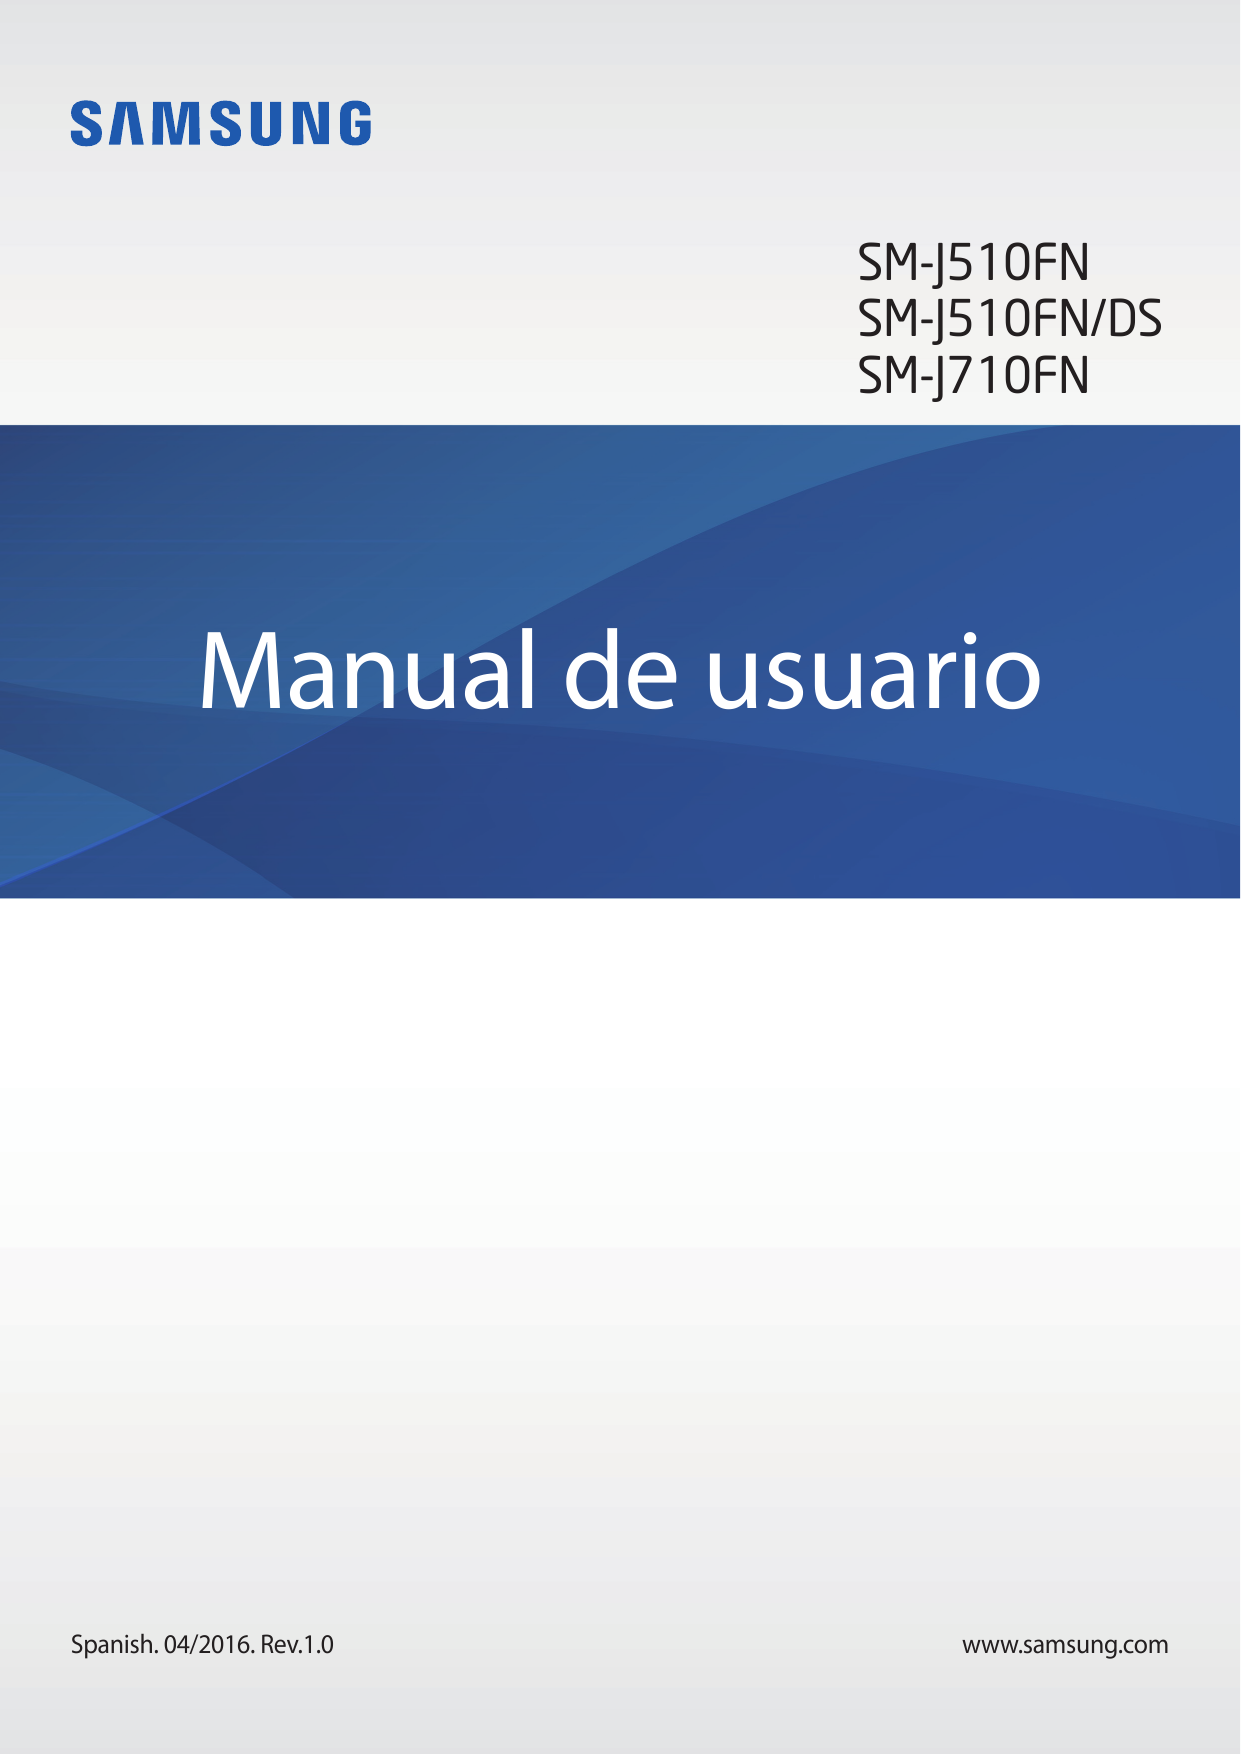 SM-J510FNSM-J510FN/DSSM-J710FNManual de usuarioSpanish. 04/2016. Rev.1.0www.samsung.com